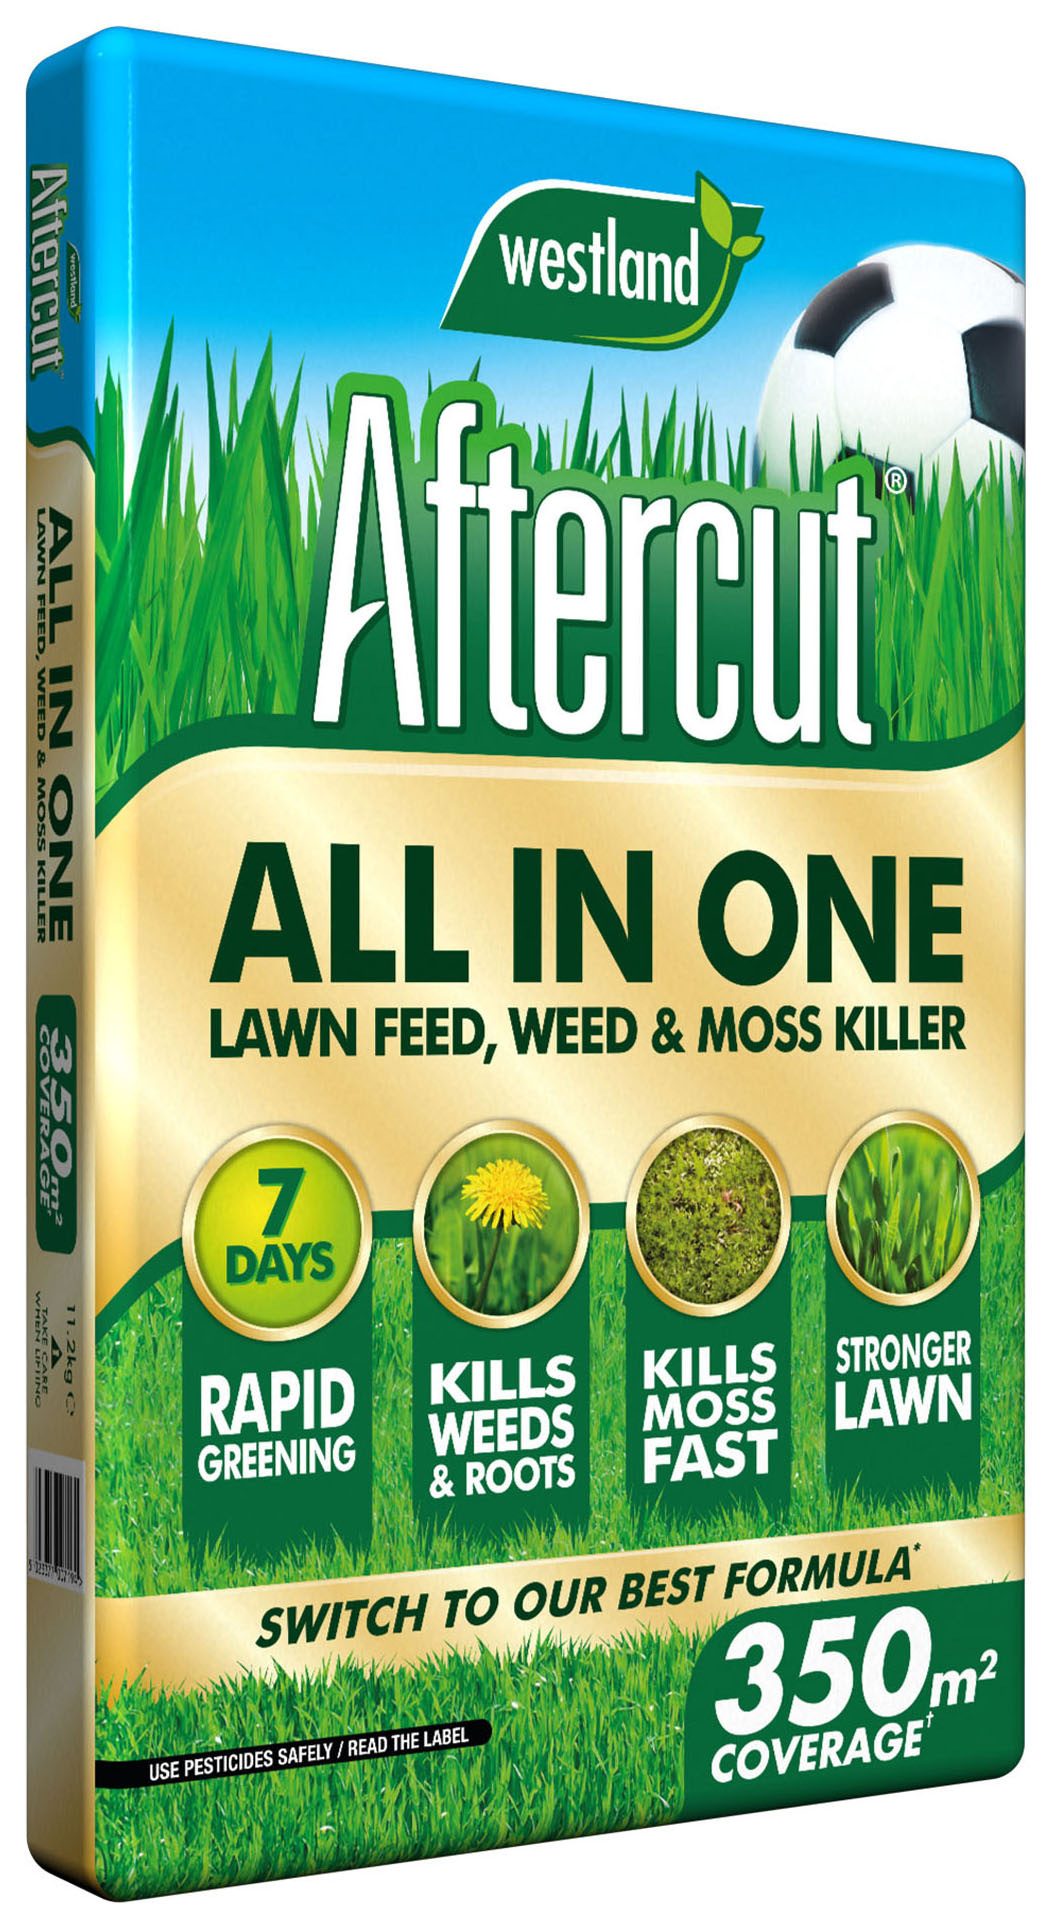 Aftercut All In One Bag Triple Action Lawn Fertiliser - 350m2